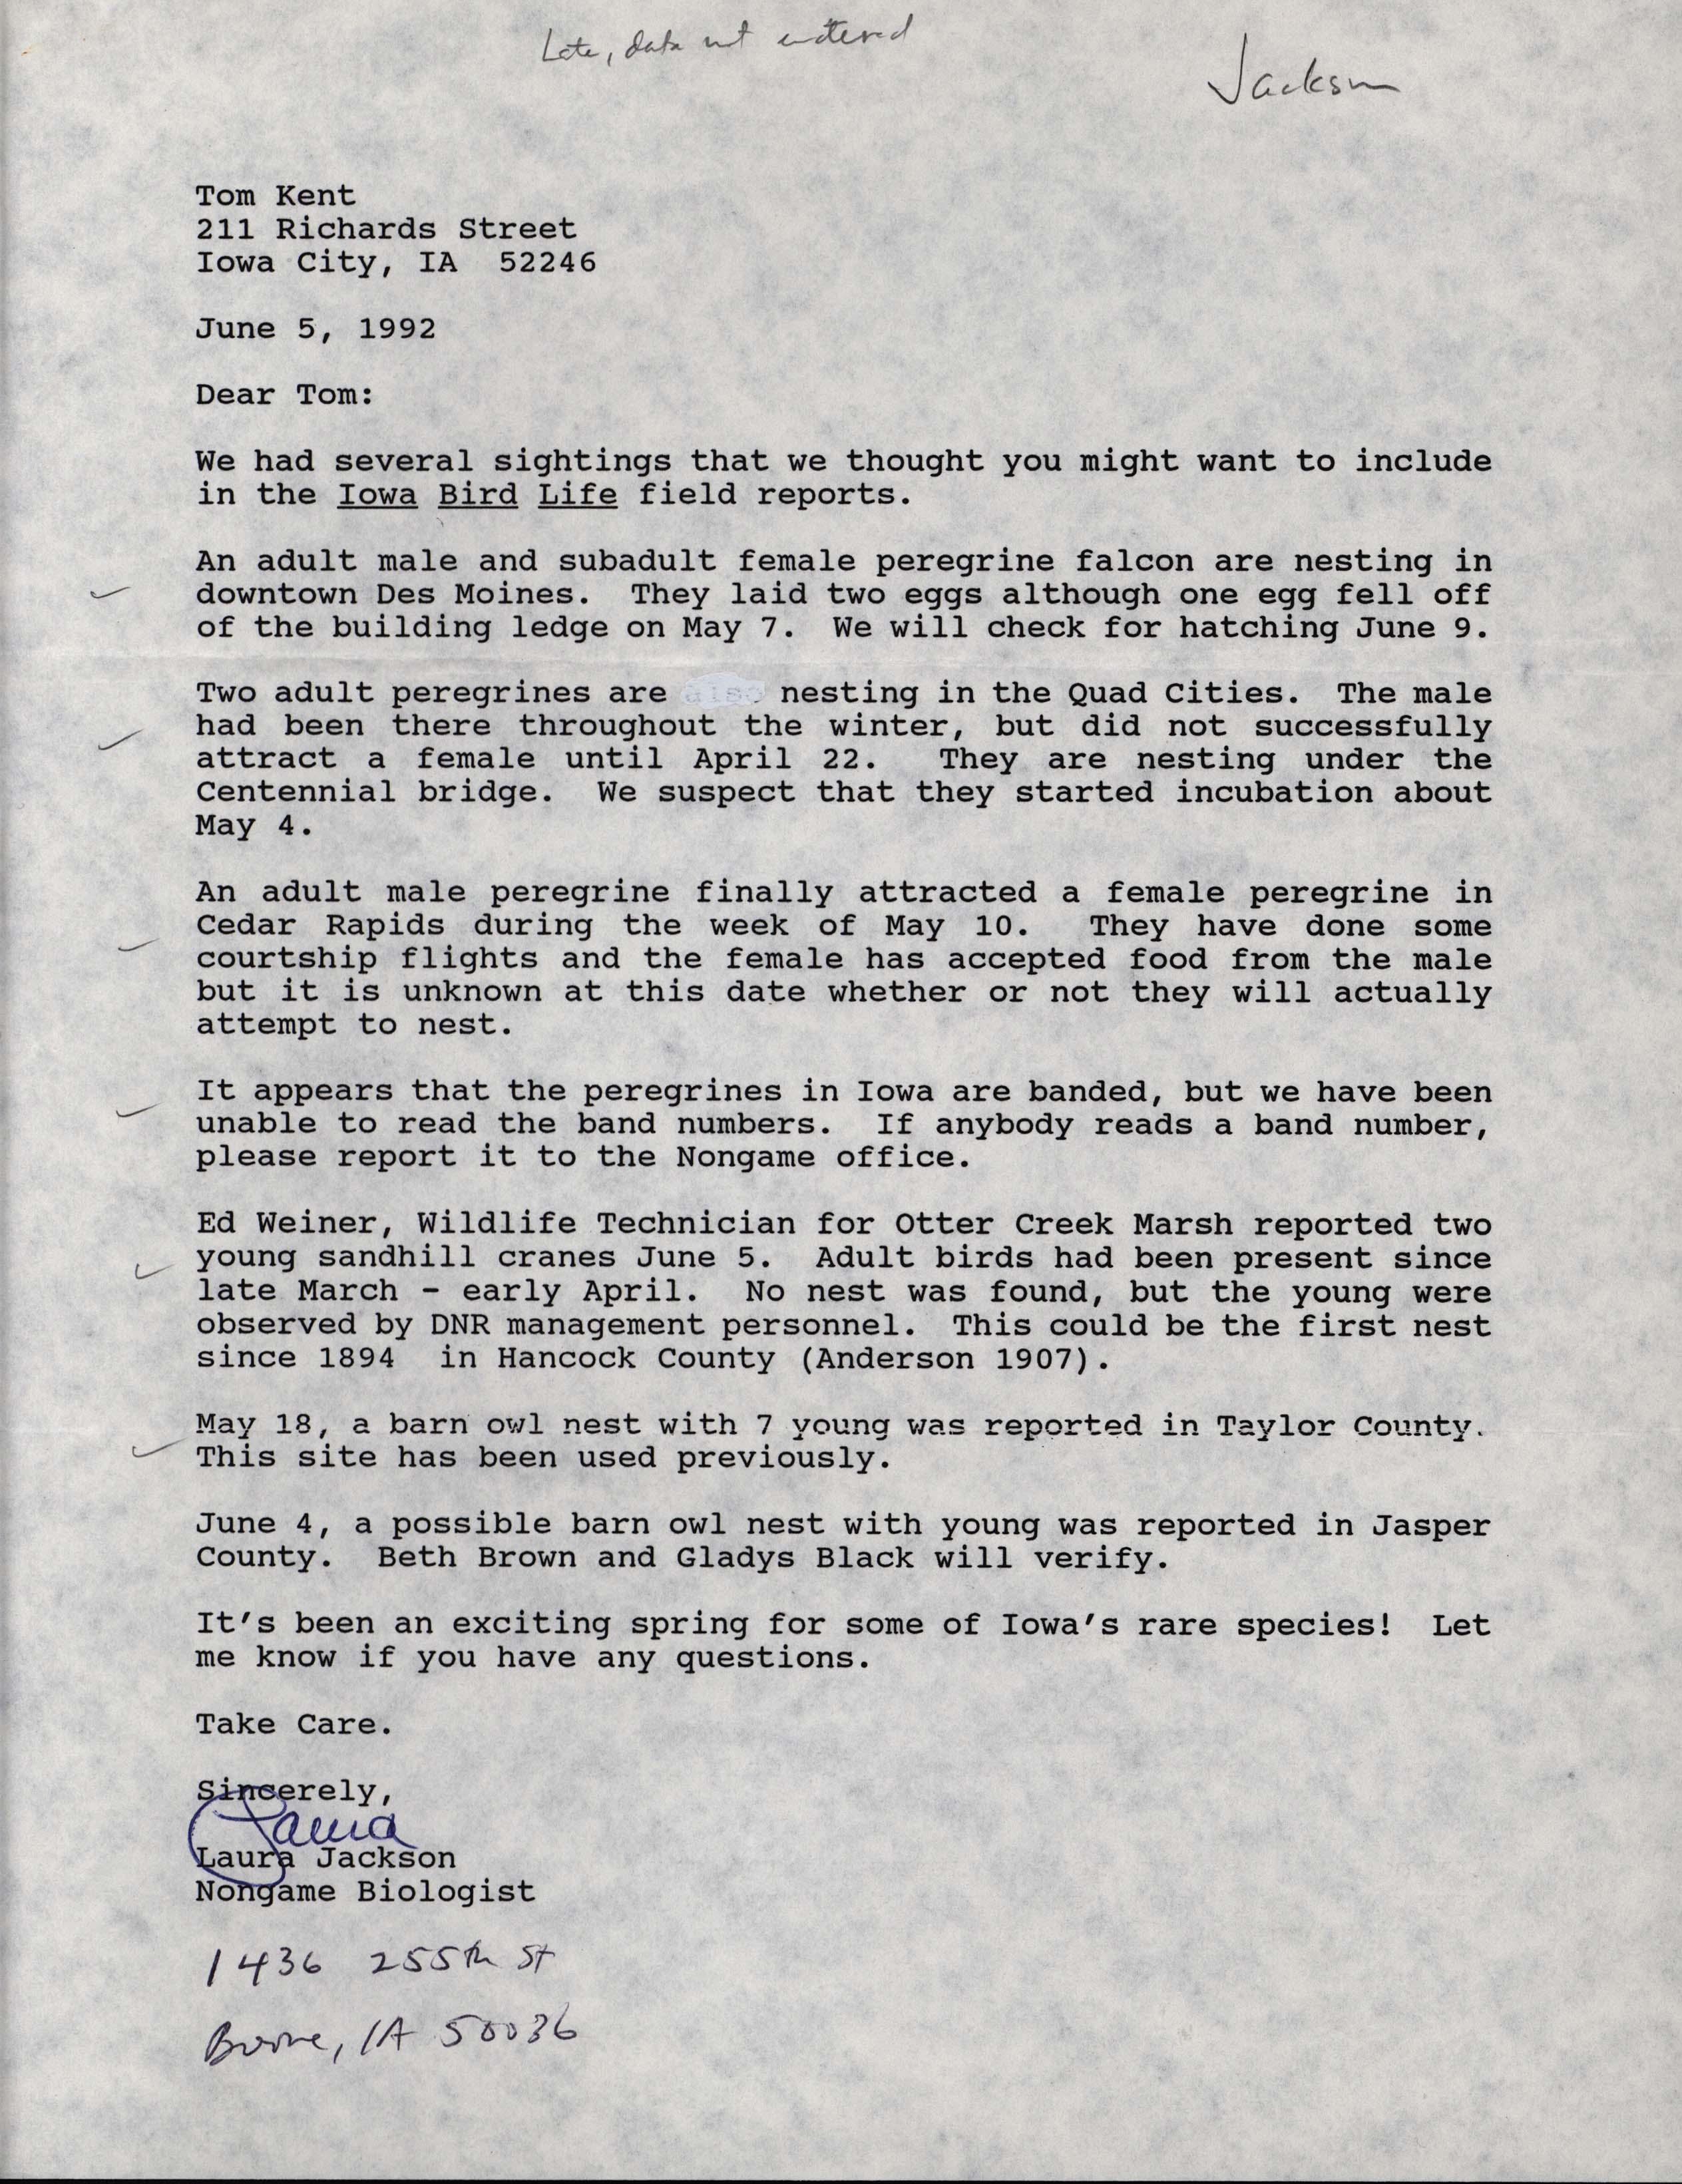 Laura Spess Jackson letter to Thomas H. Kent regarding bird sightings, June 5, 1992